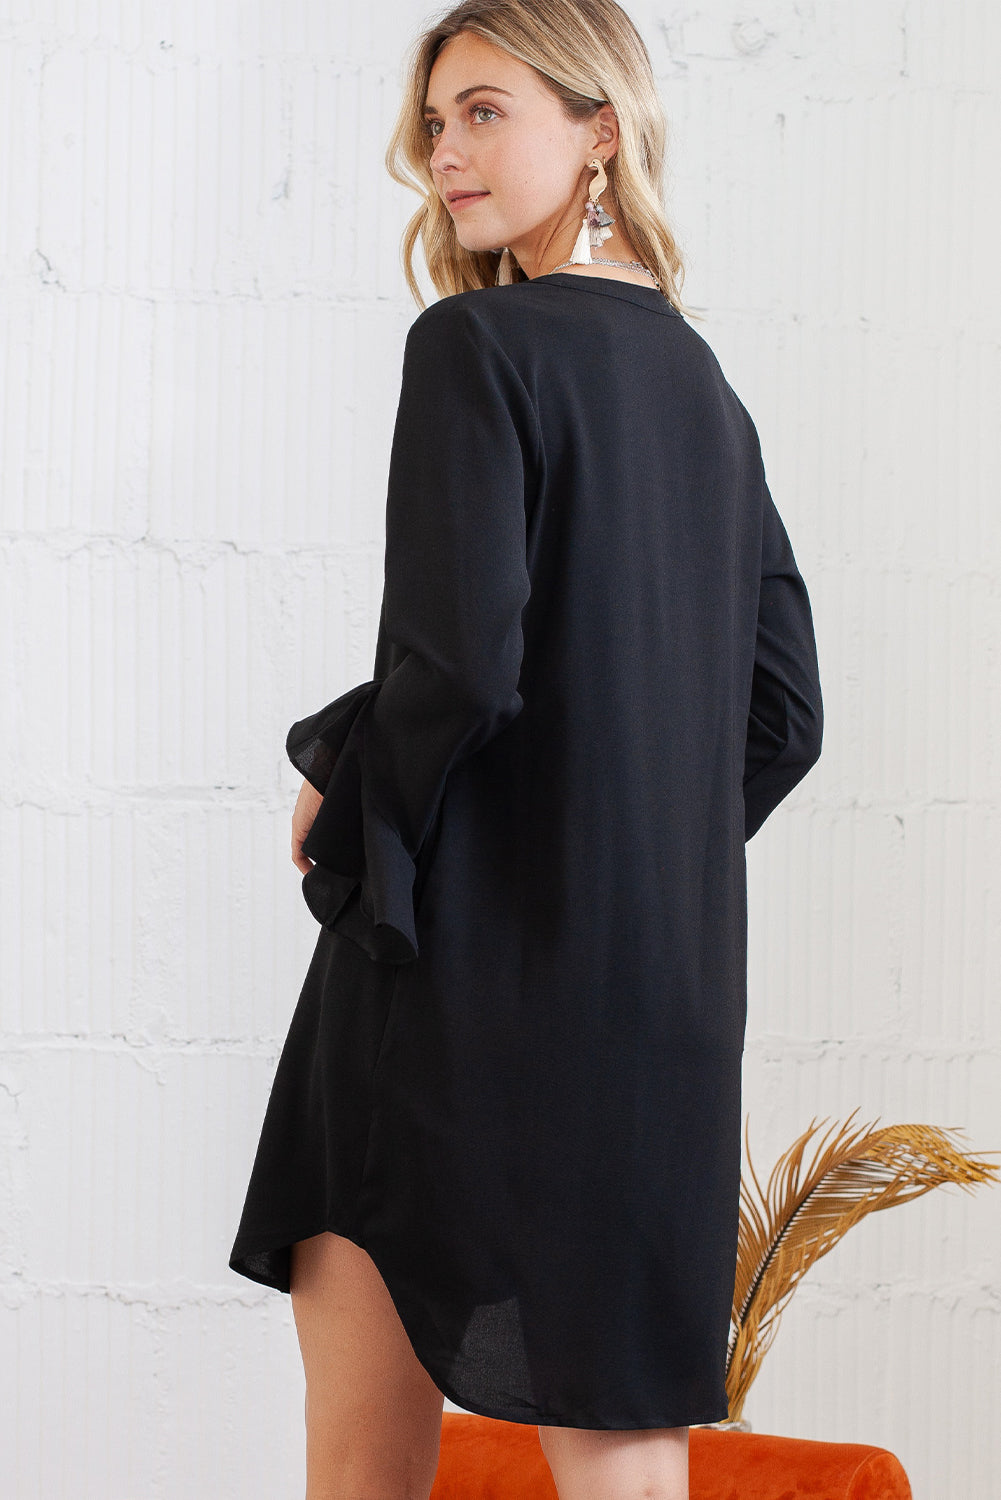 Black Pleated Solid Color Ruffle Sleeve Mini Dress